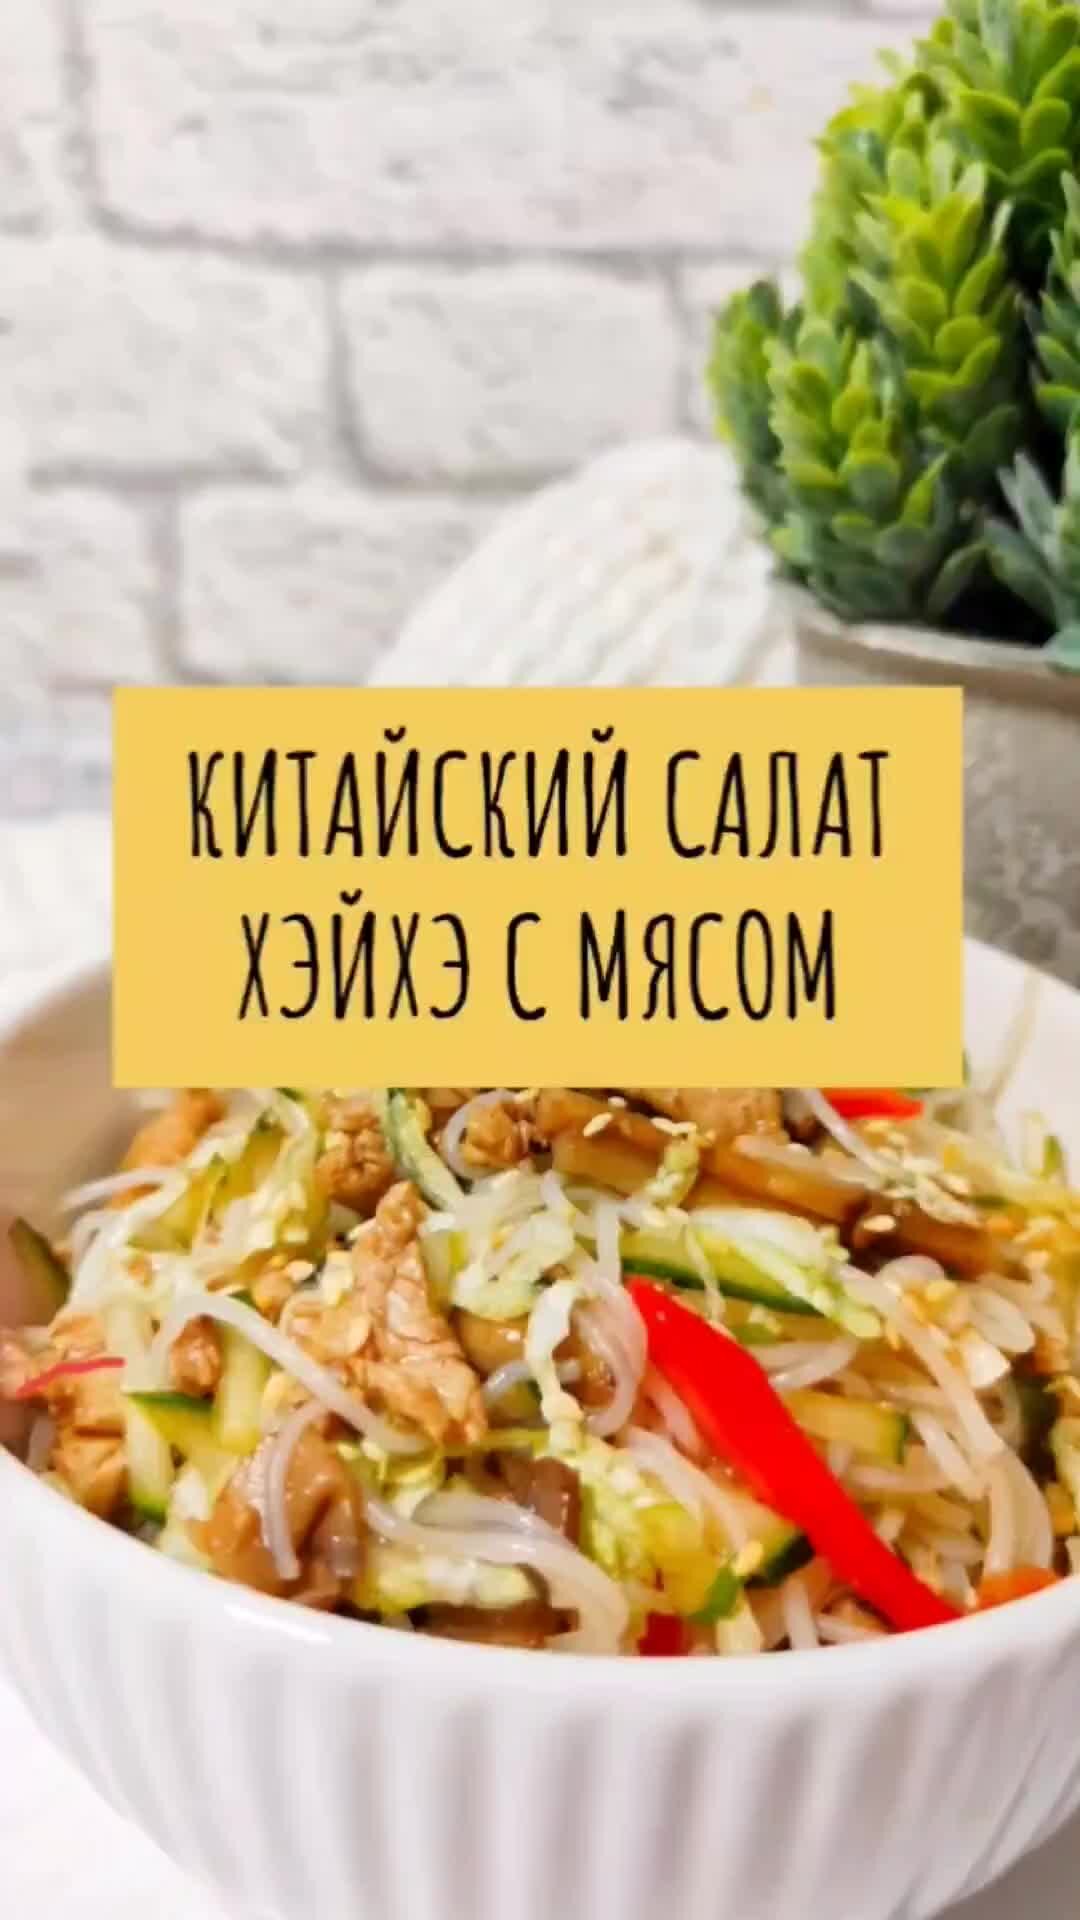 Говядина с огурцом по-китайски - пошаговый рецепт с фото на internat-mednogorsk.ru